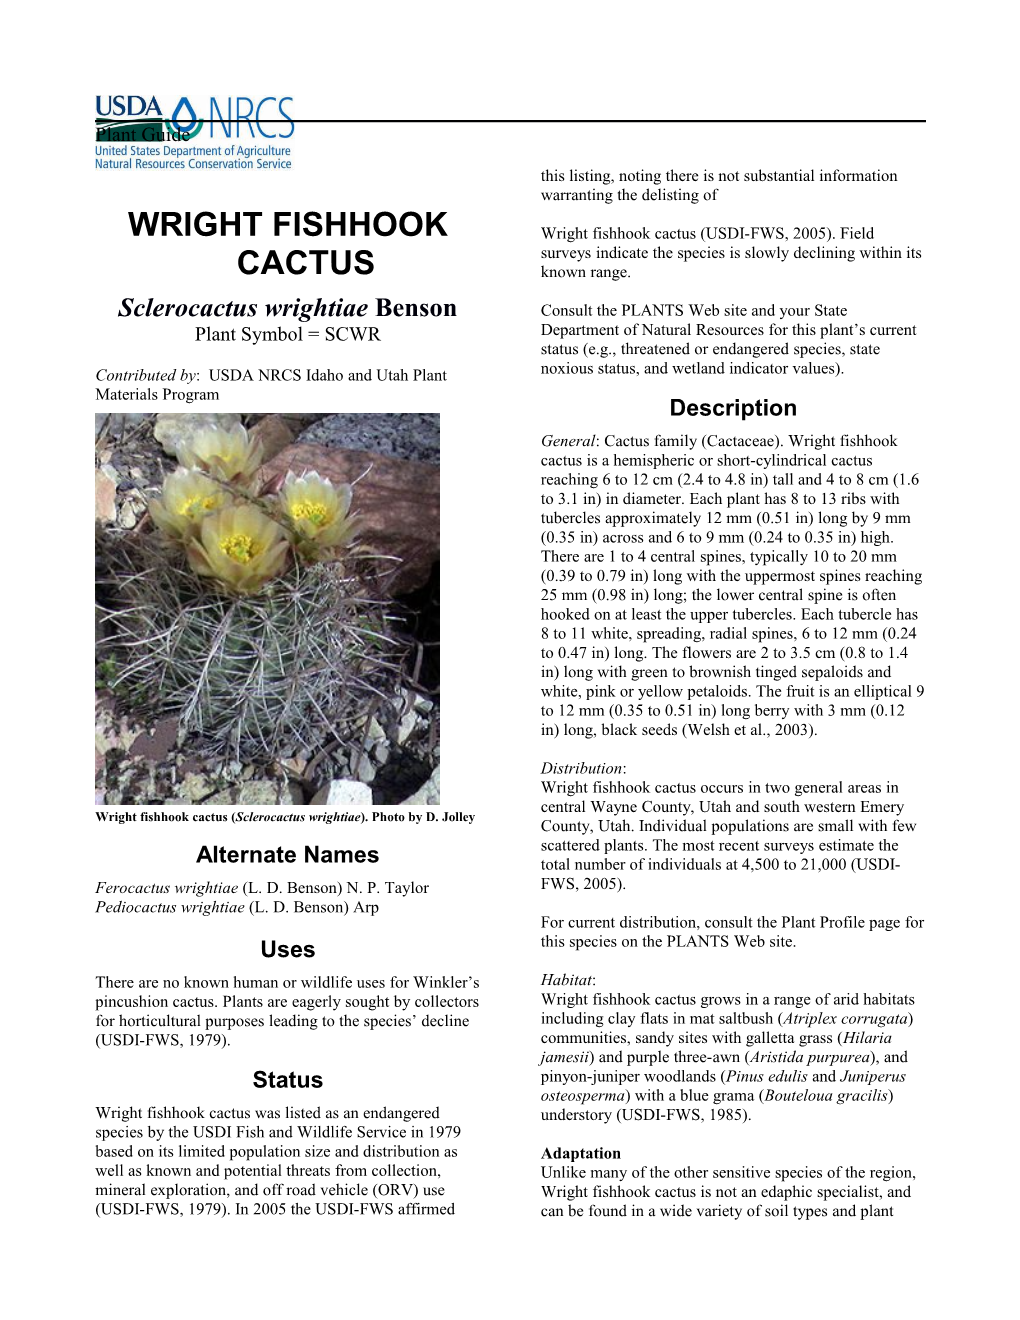 Plant Guide for Wright Fishhook Cactus (Sclerocactus Wrightiae)